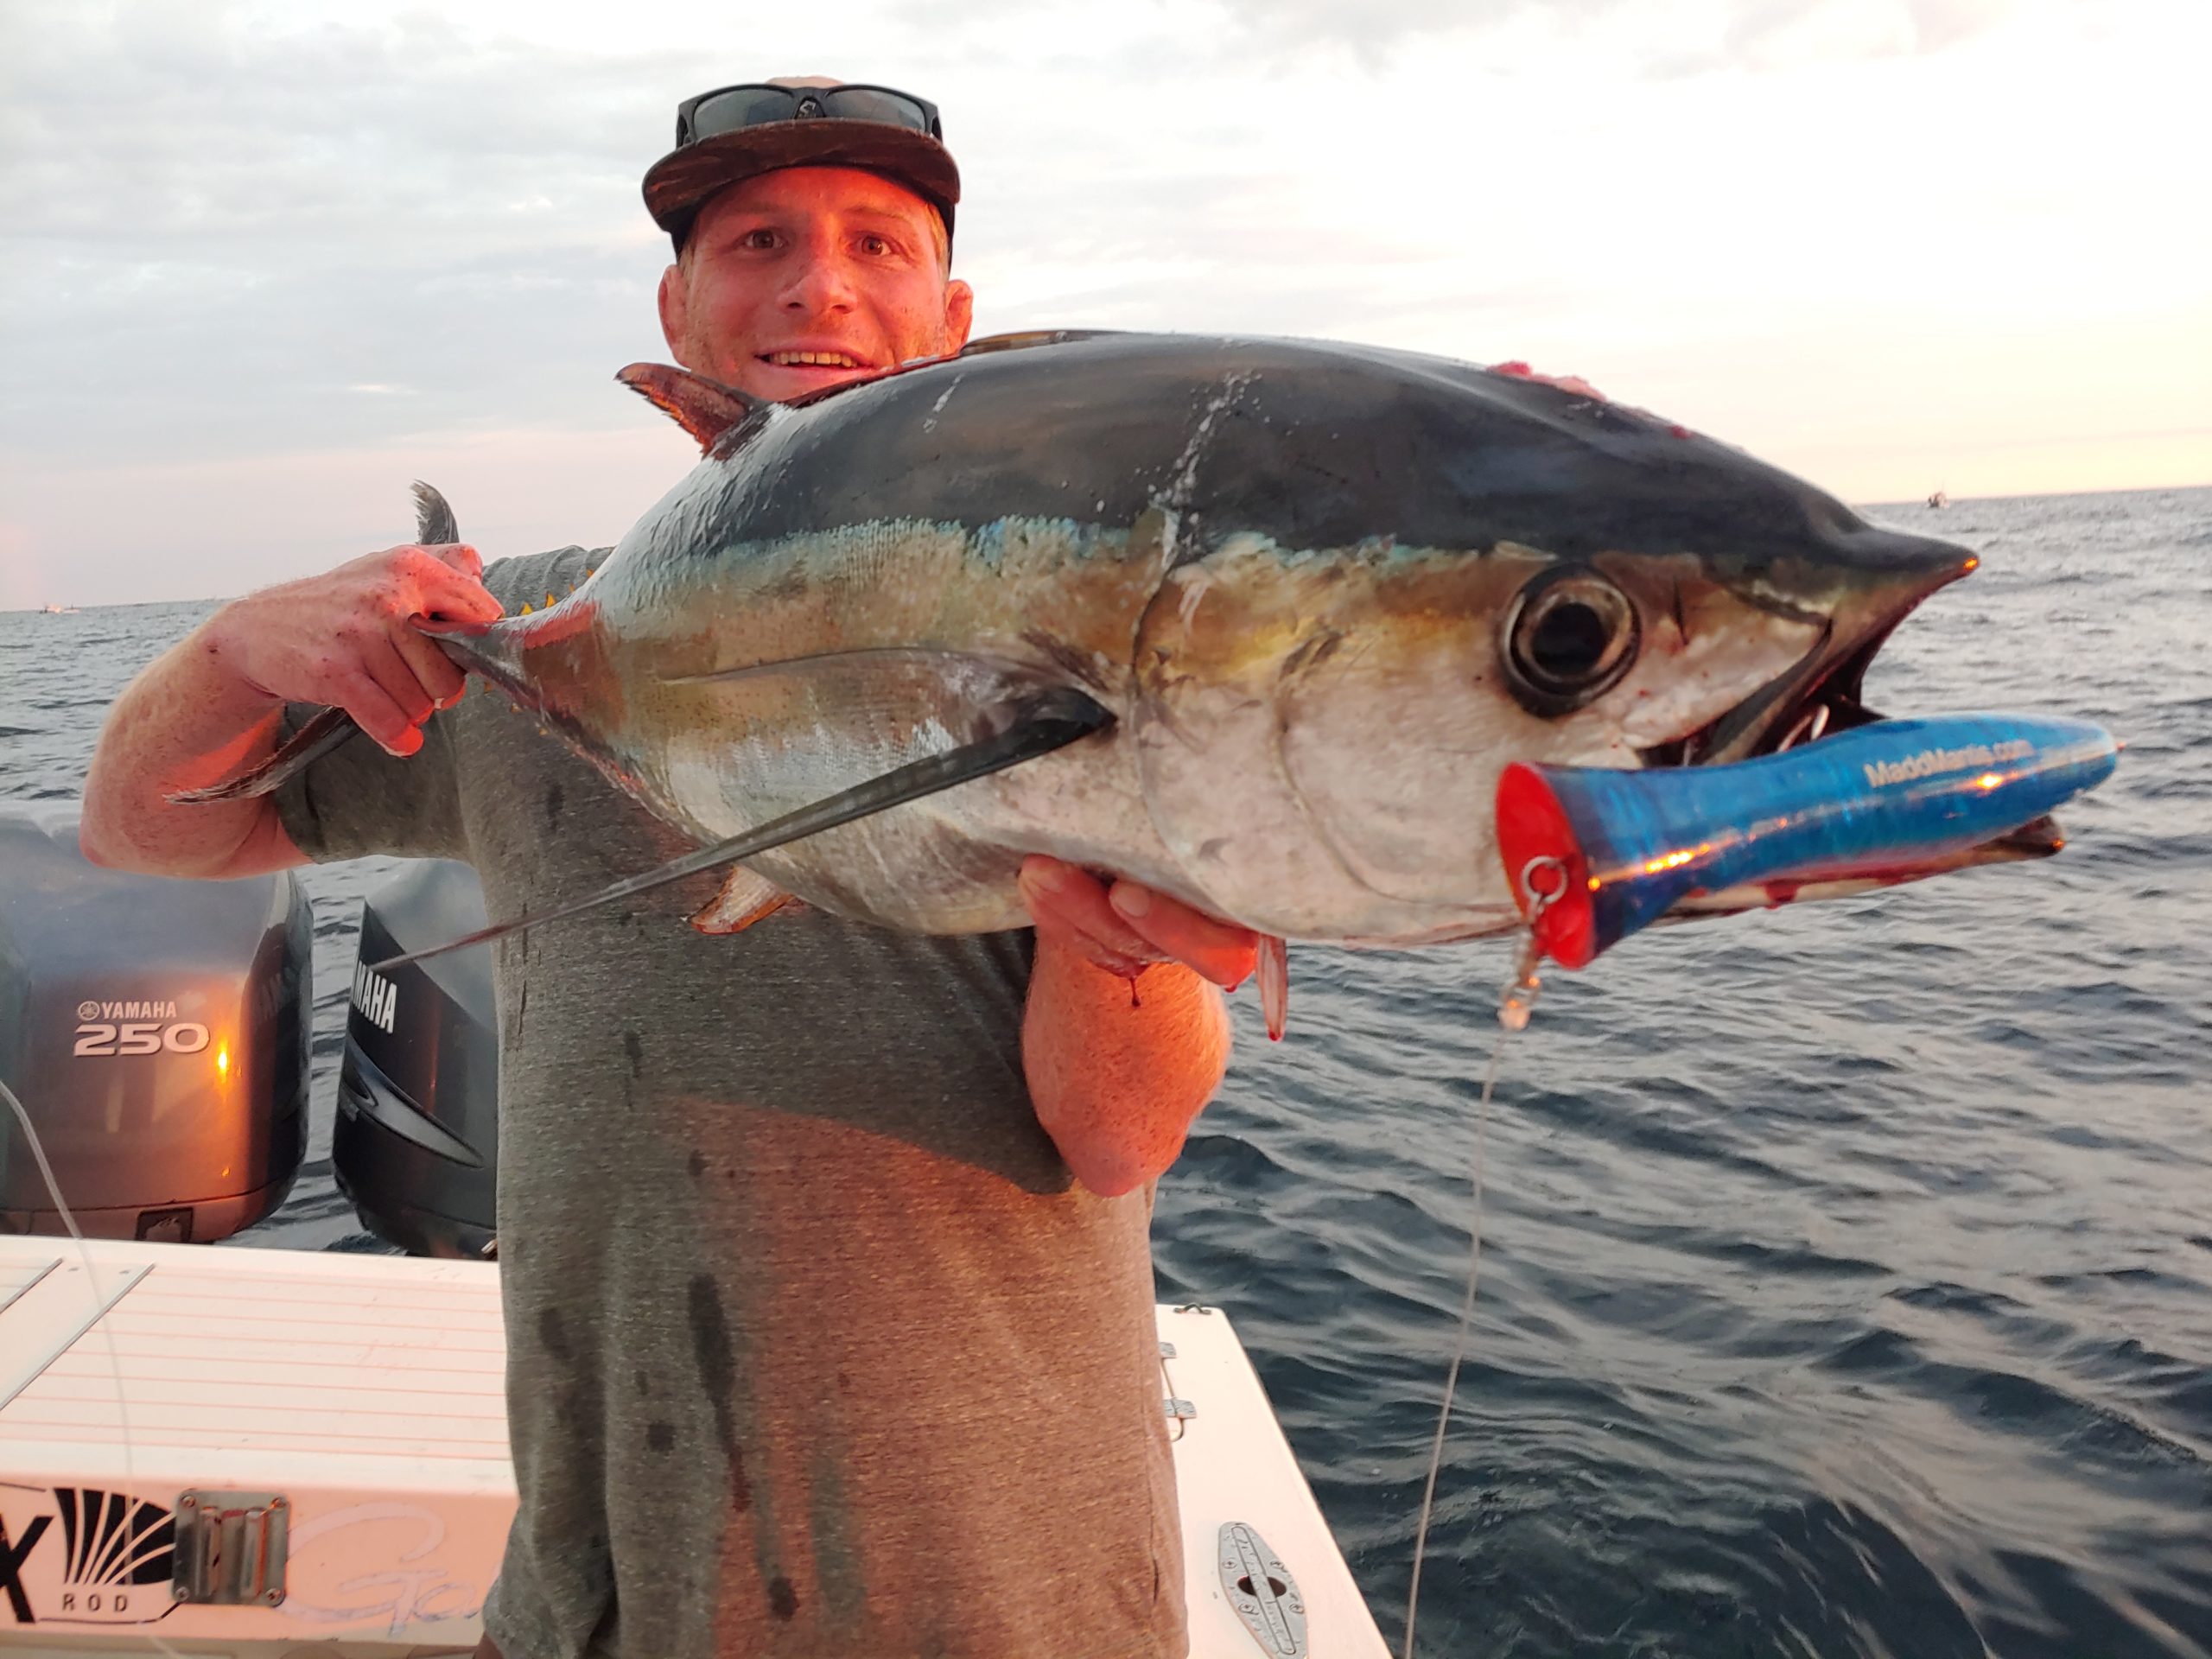 POPPIN' YELLOWFIN: THE HUNT FOR TOPWATER TUNA - The Fisherman